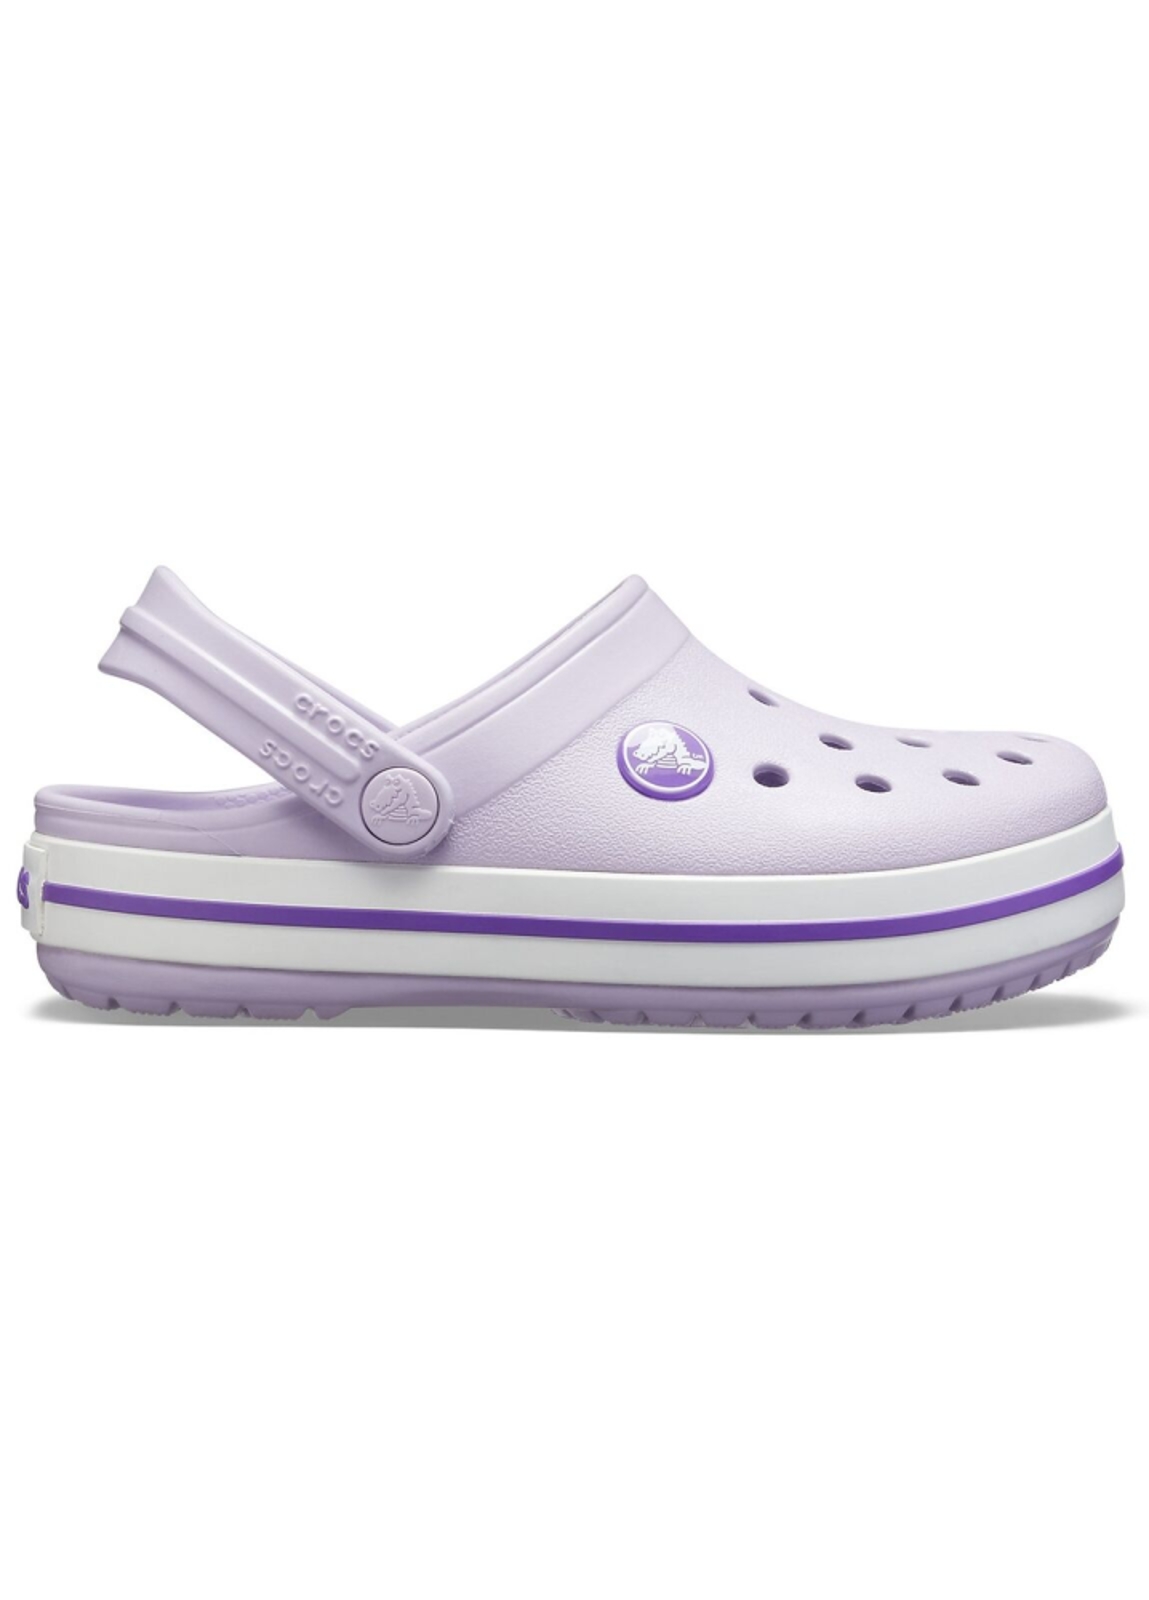 Crocs Crocband Lavender / Neon Purple 